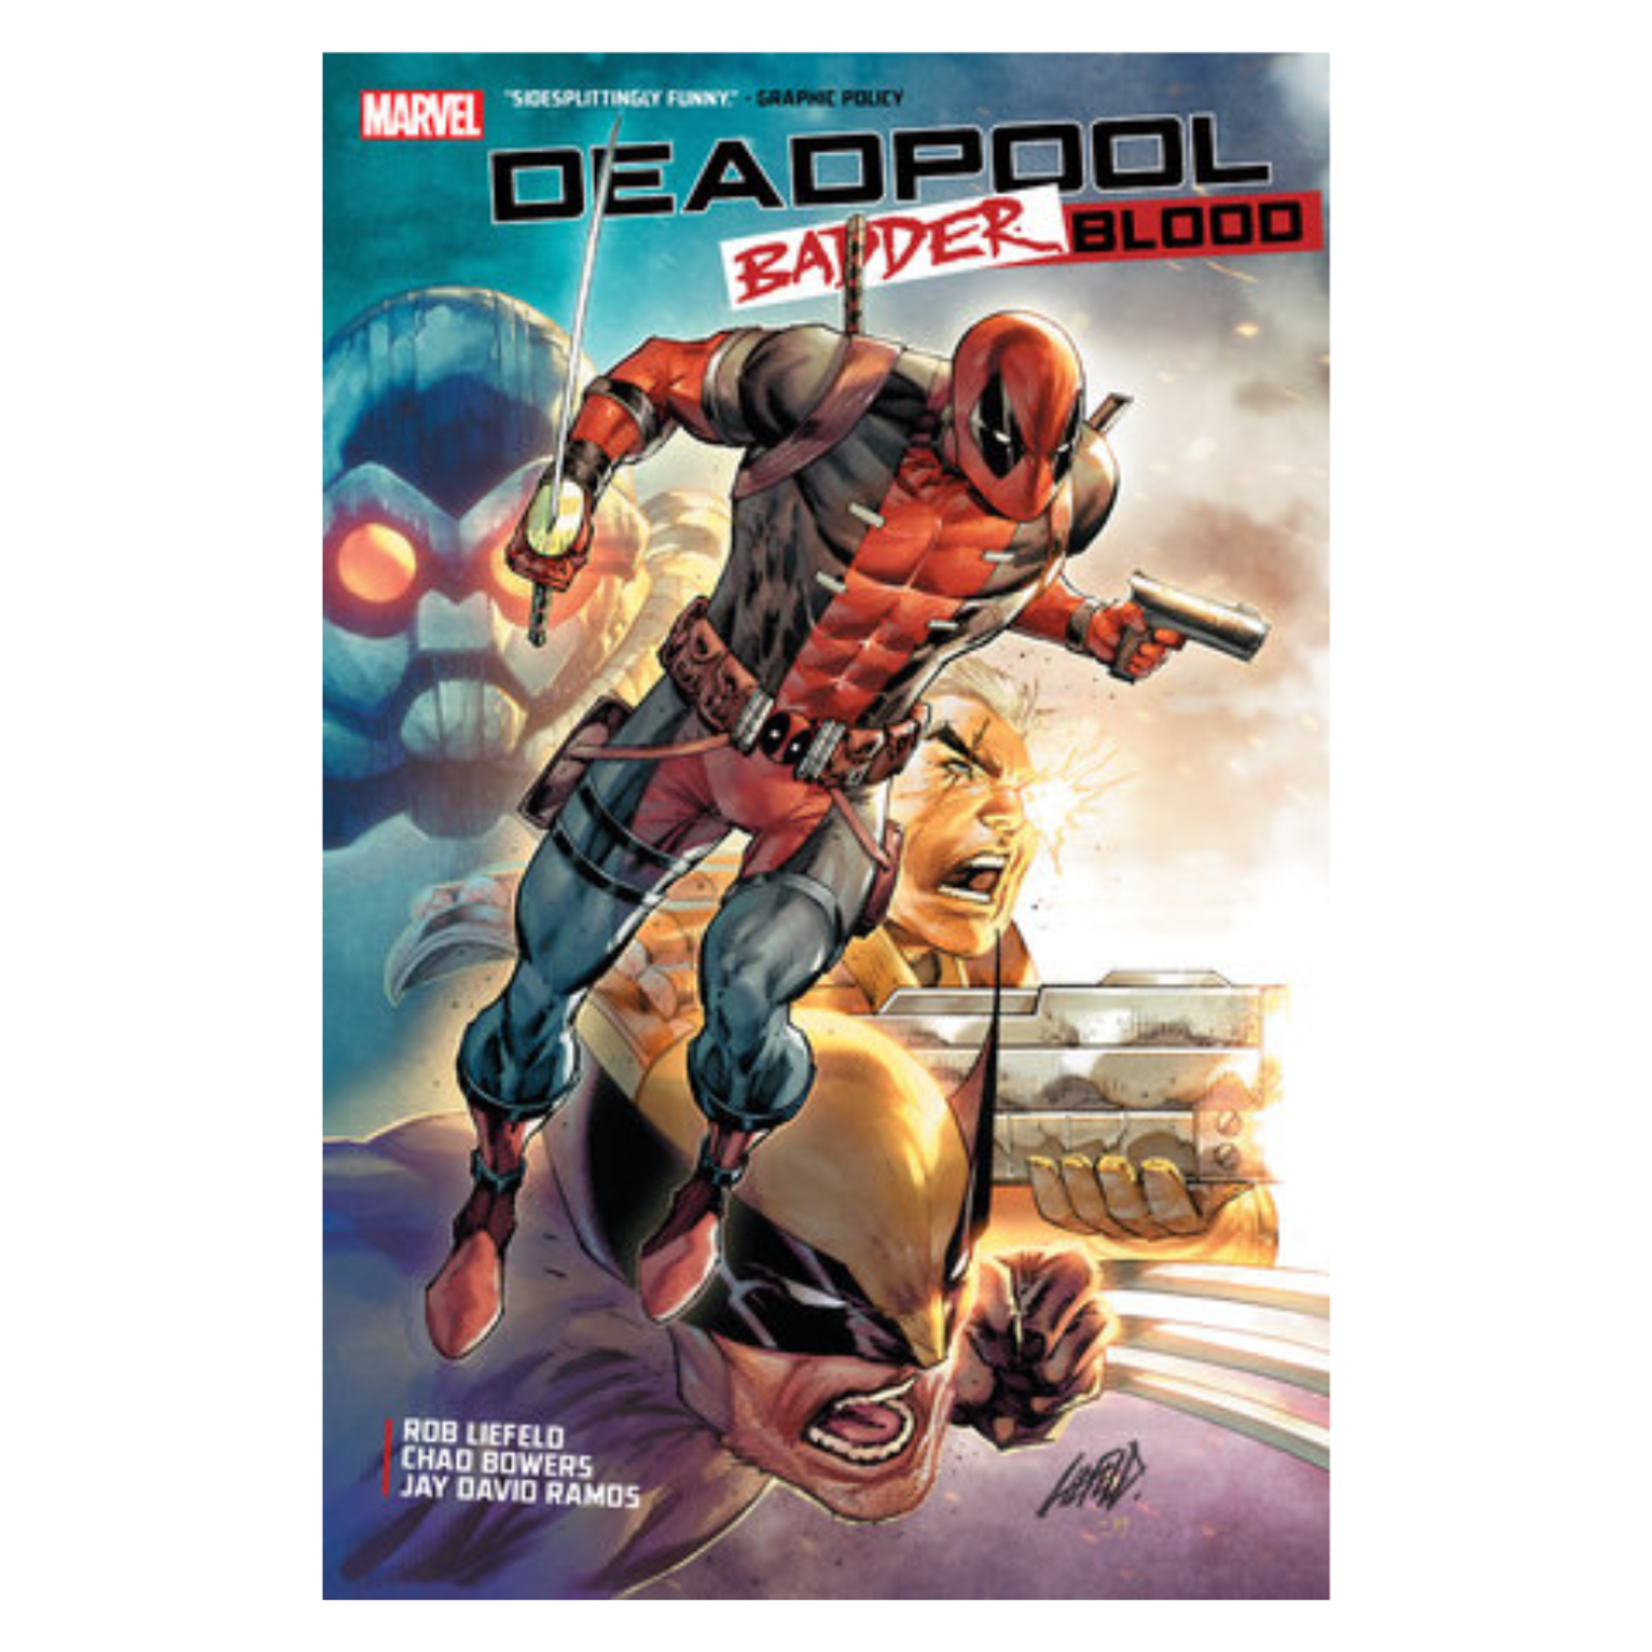 Marvel Comics Deadpool Badder Blood TP